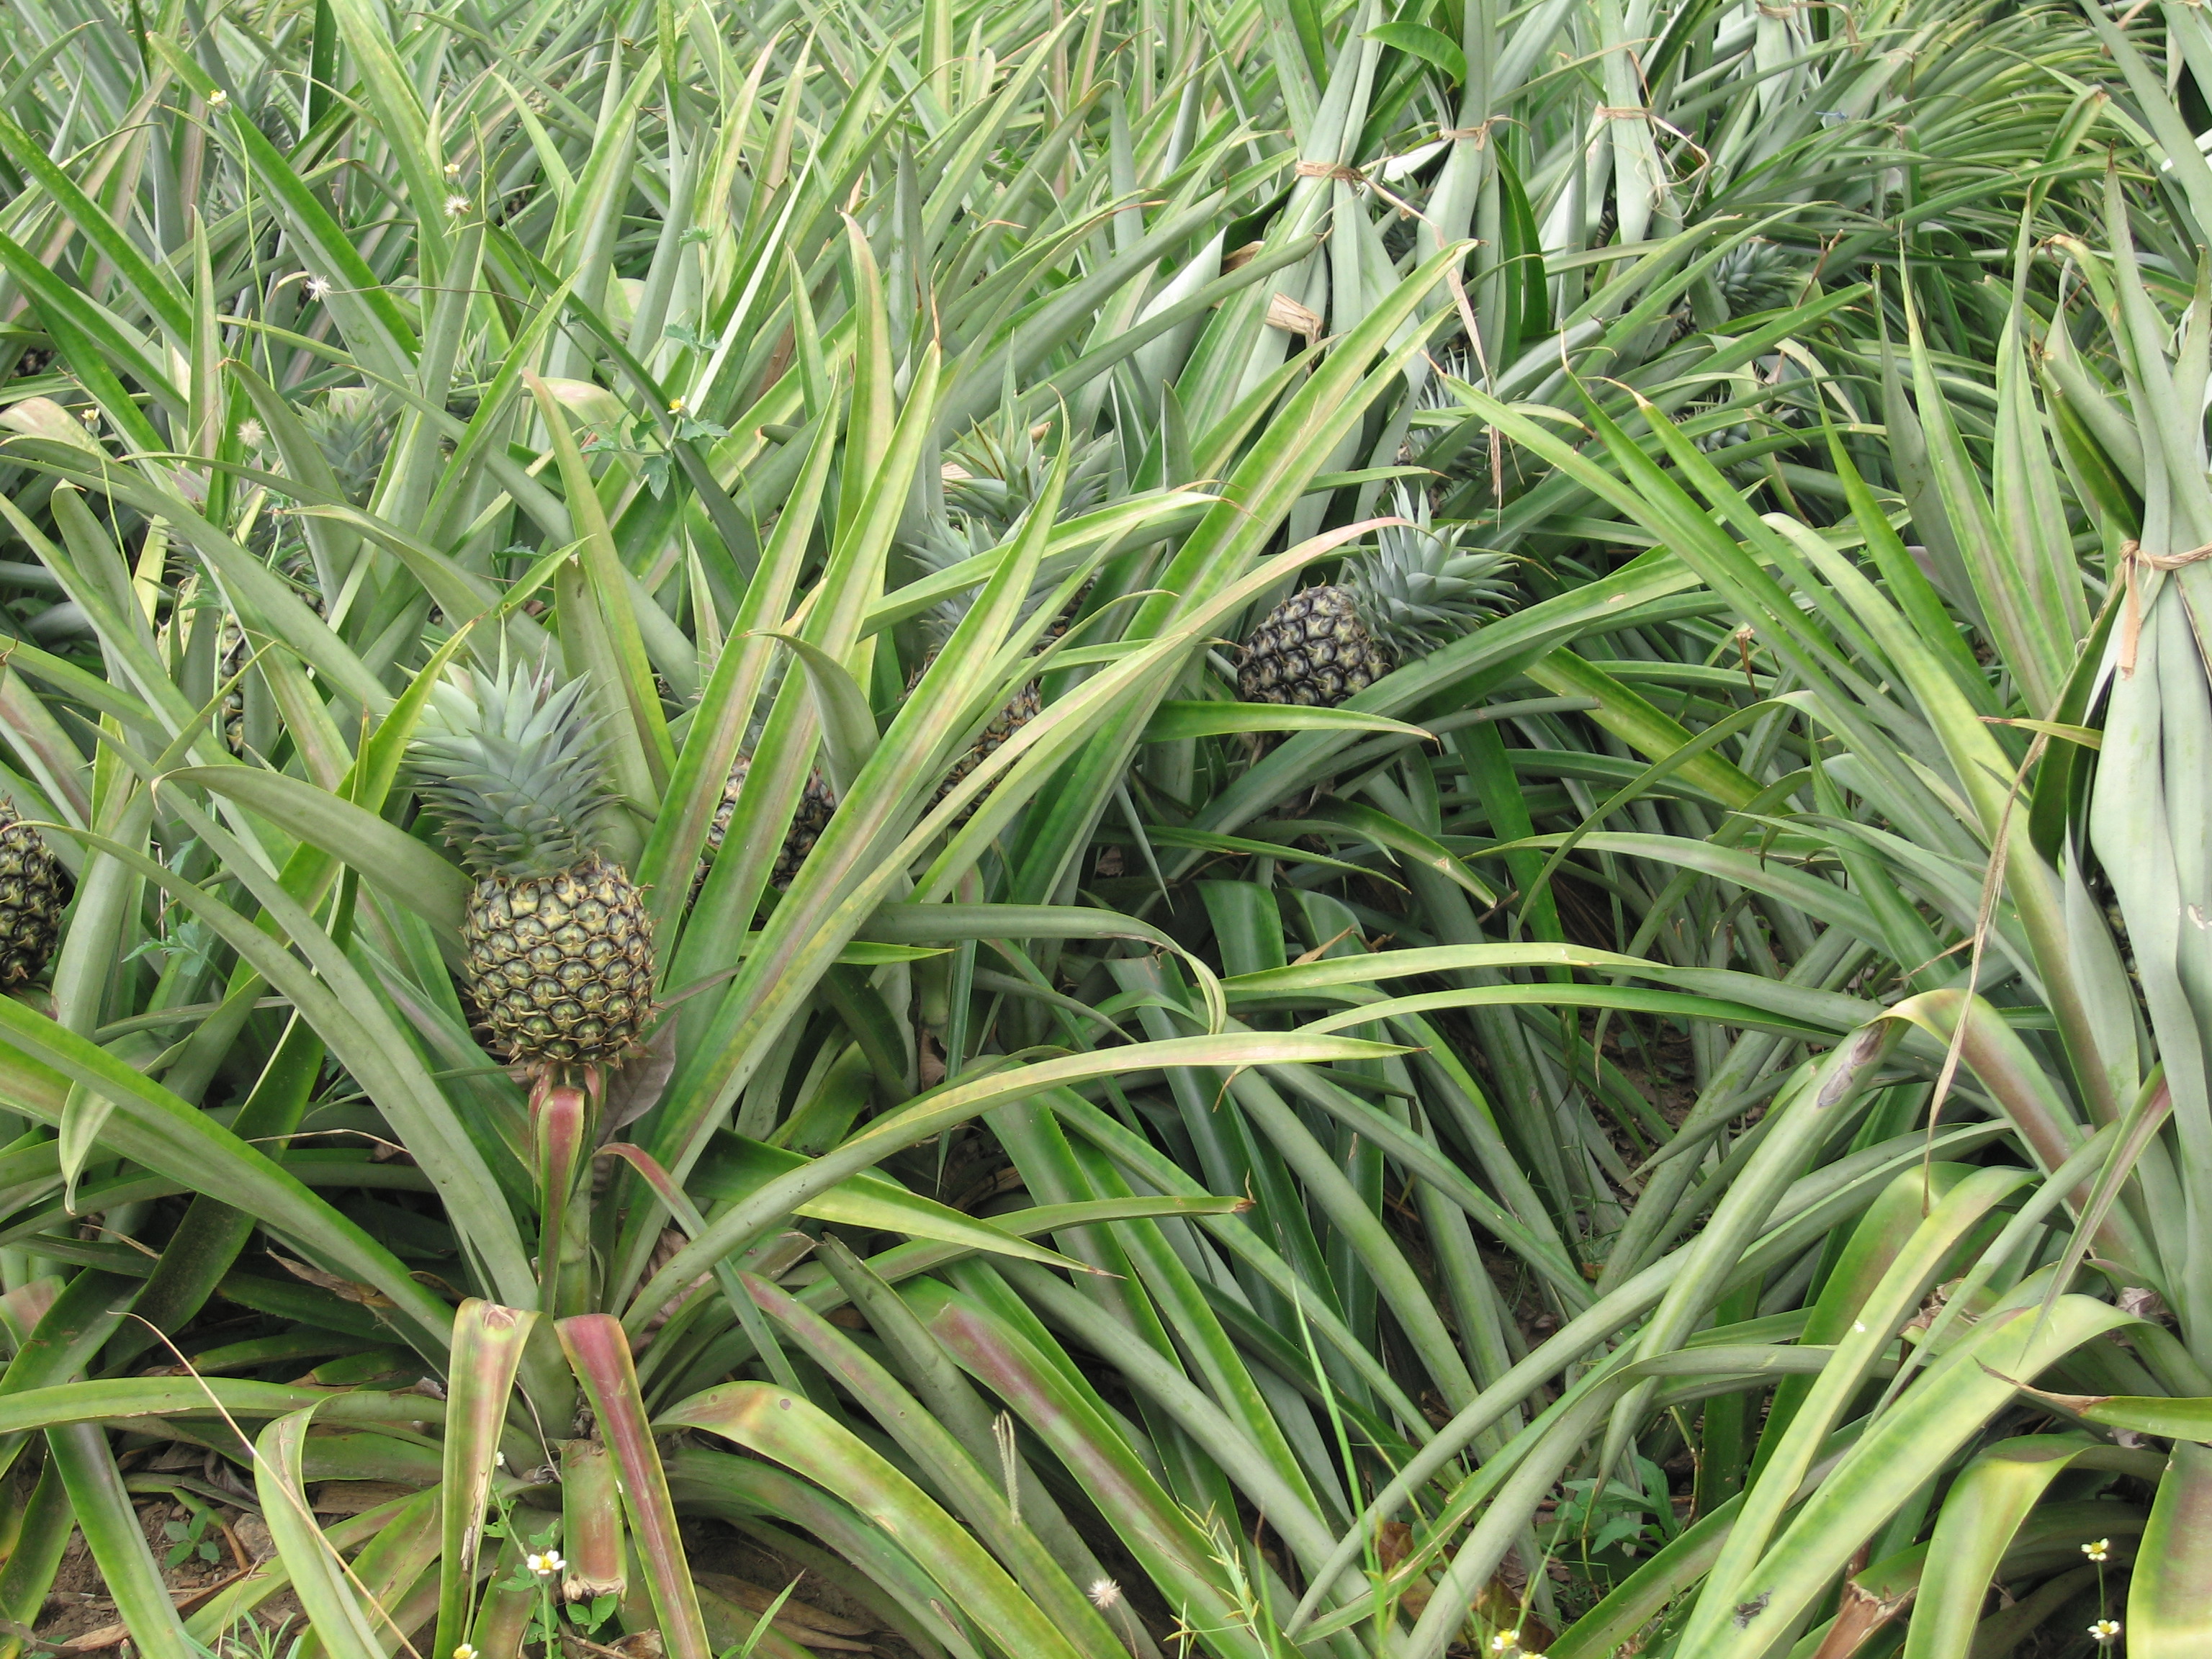 Pineapples growing near the Sanaga river